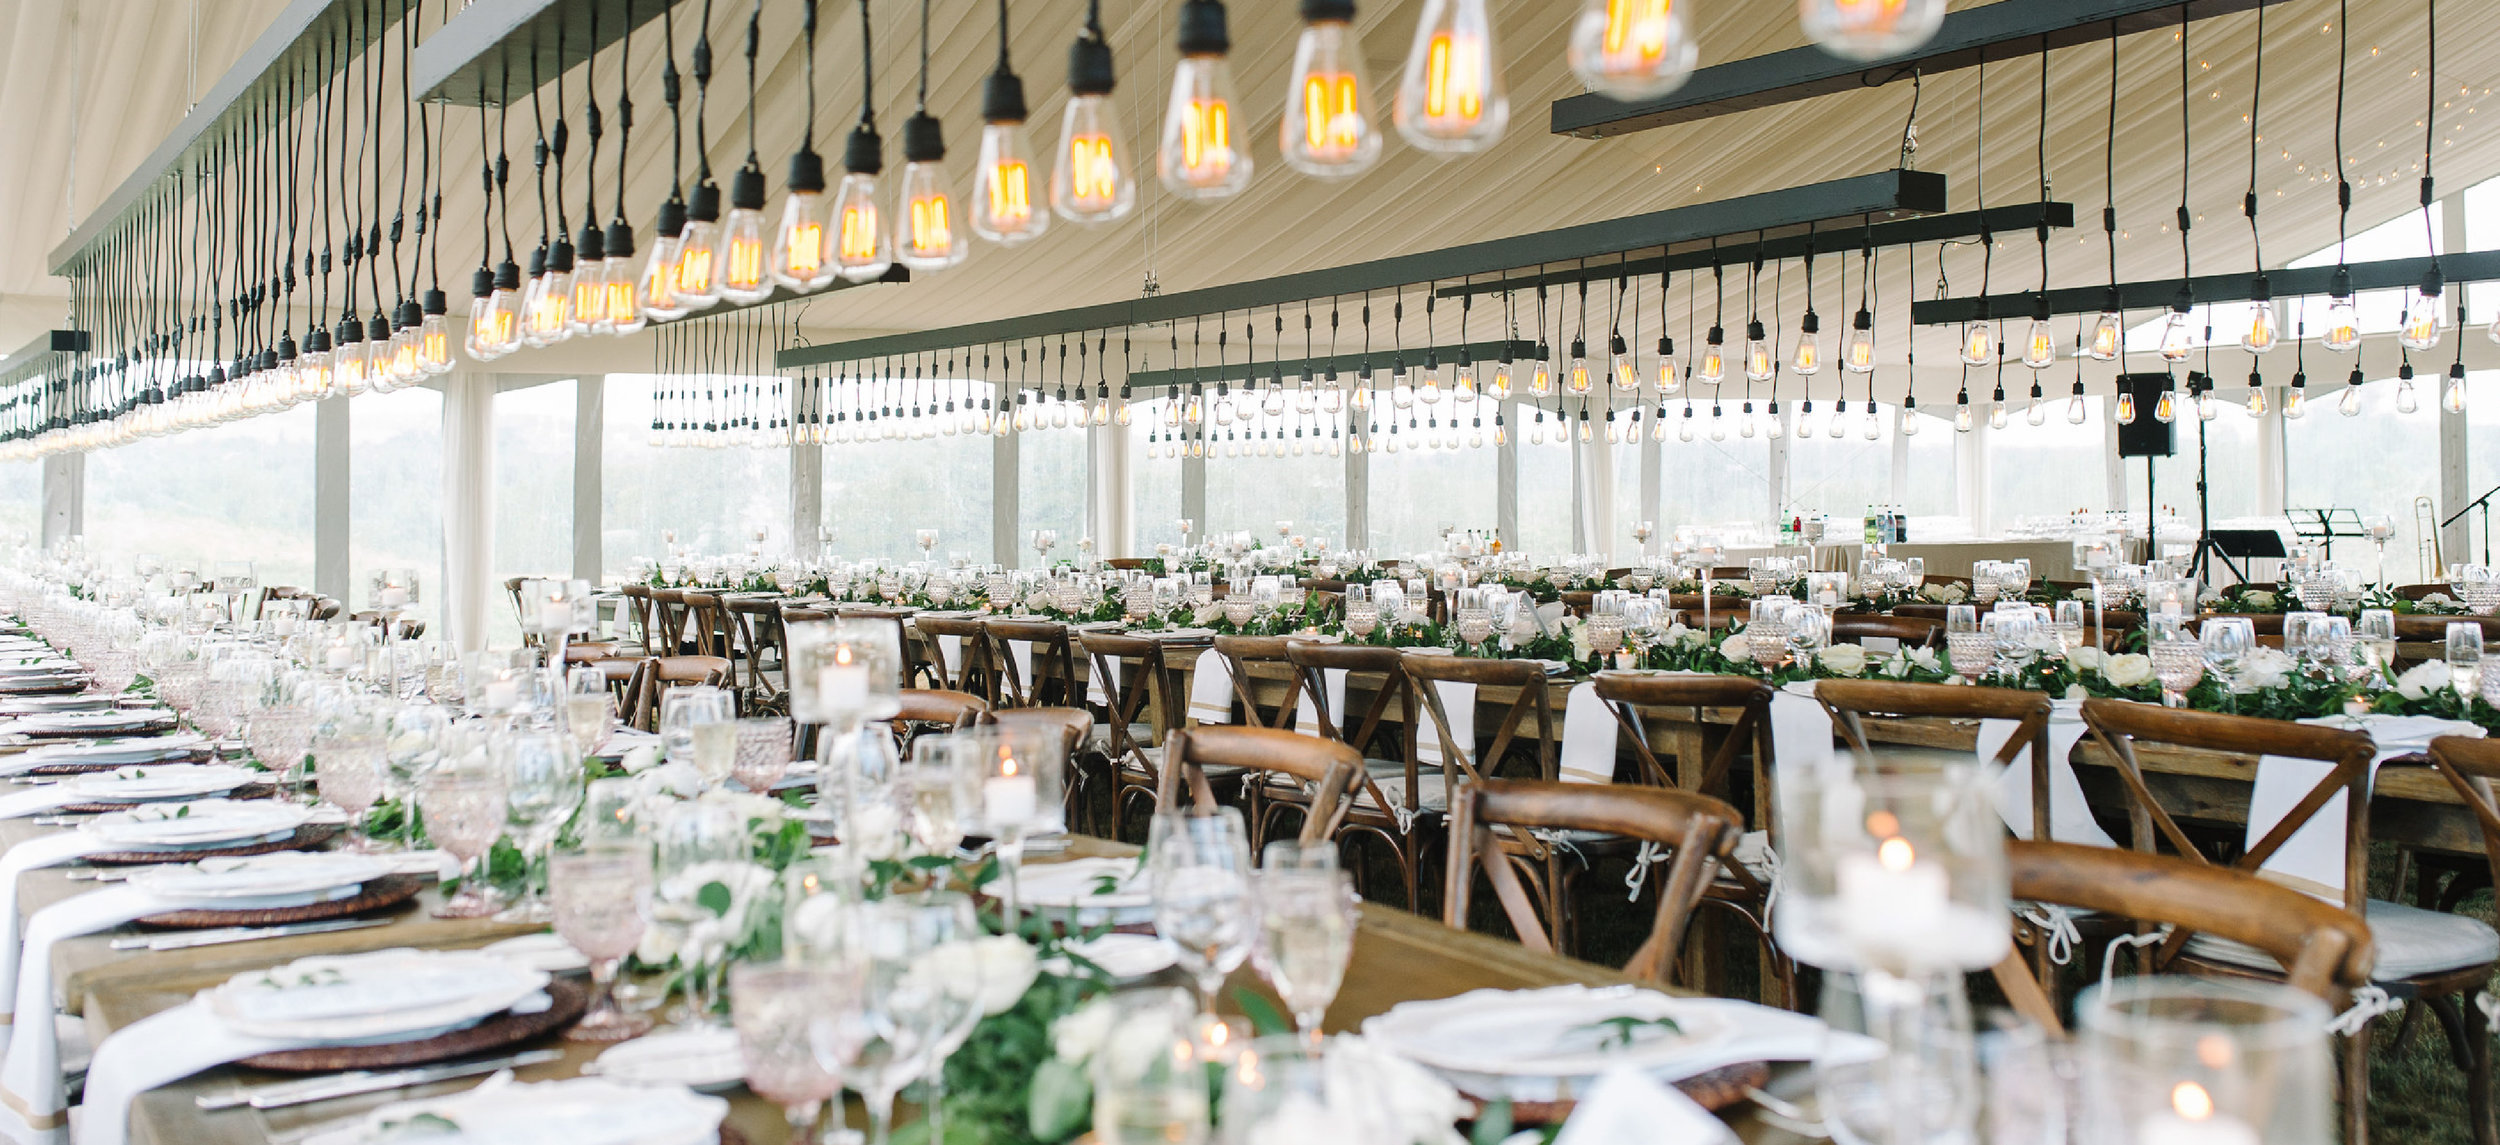 6 Trending Wedding Reception Styles Toben Food By Design